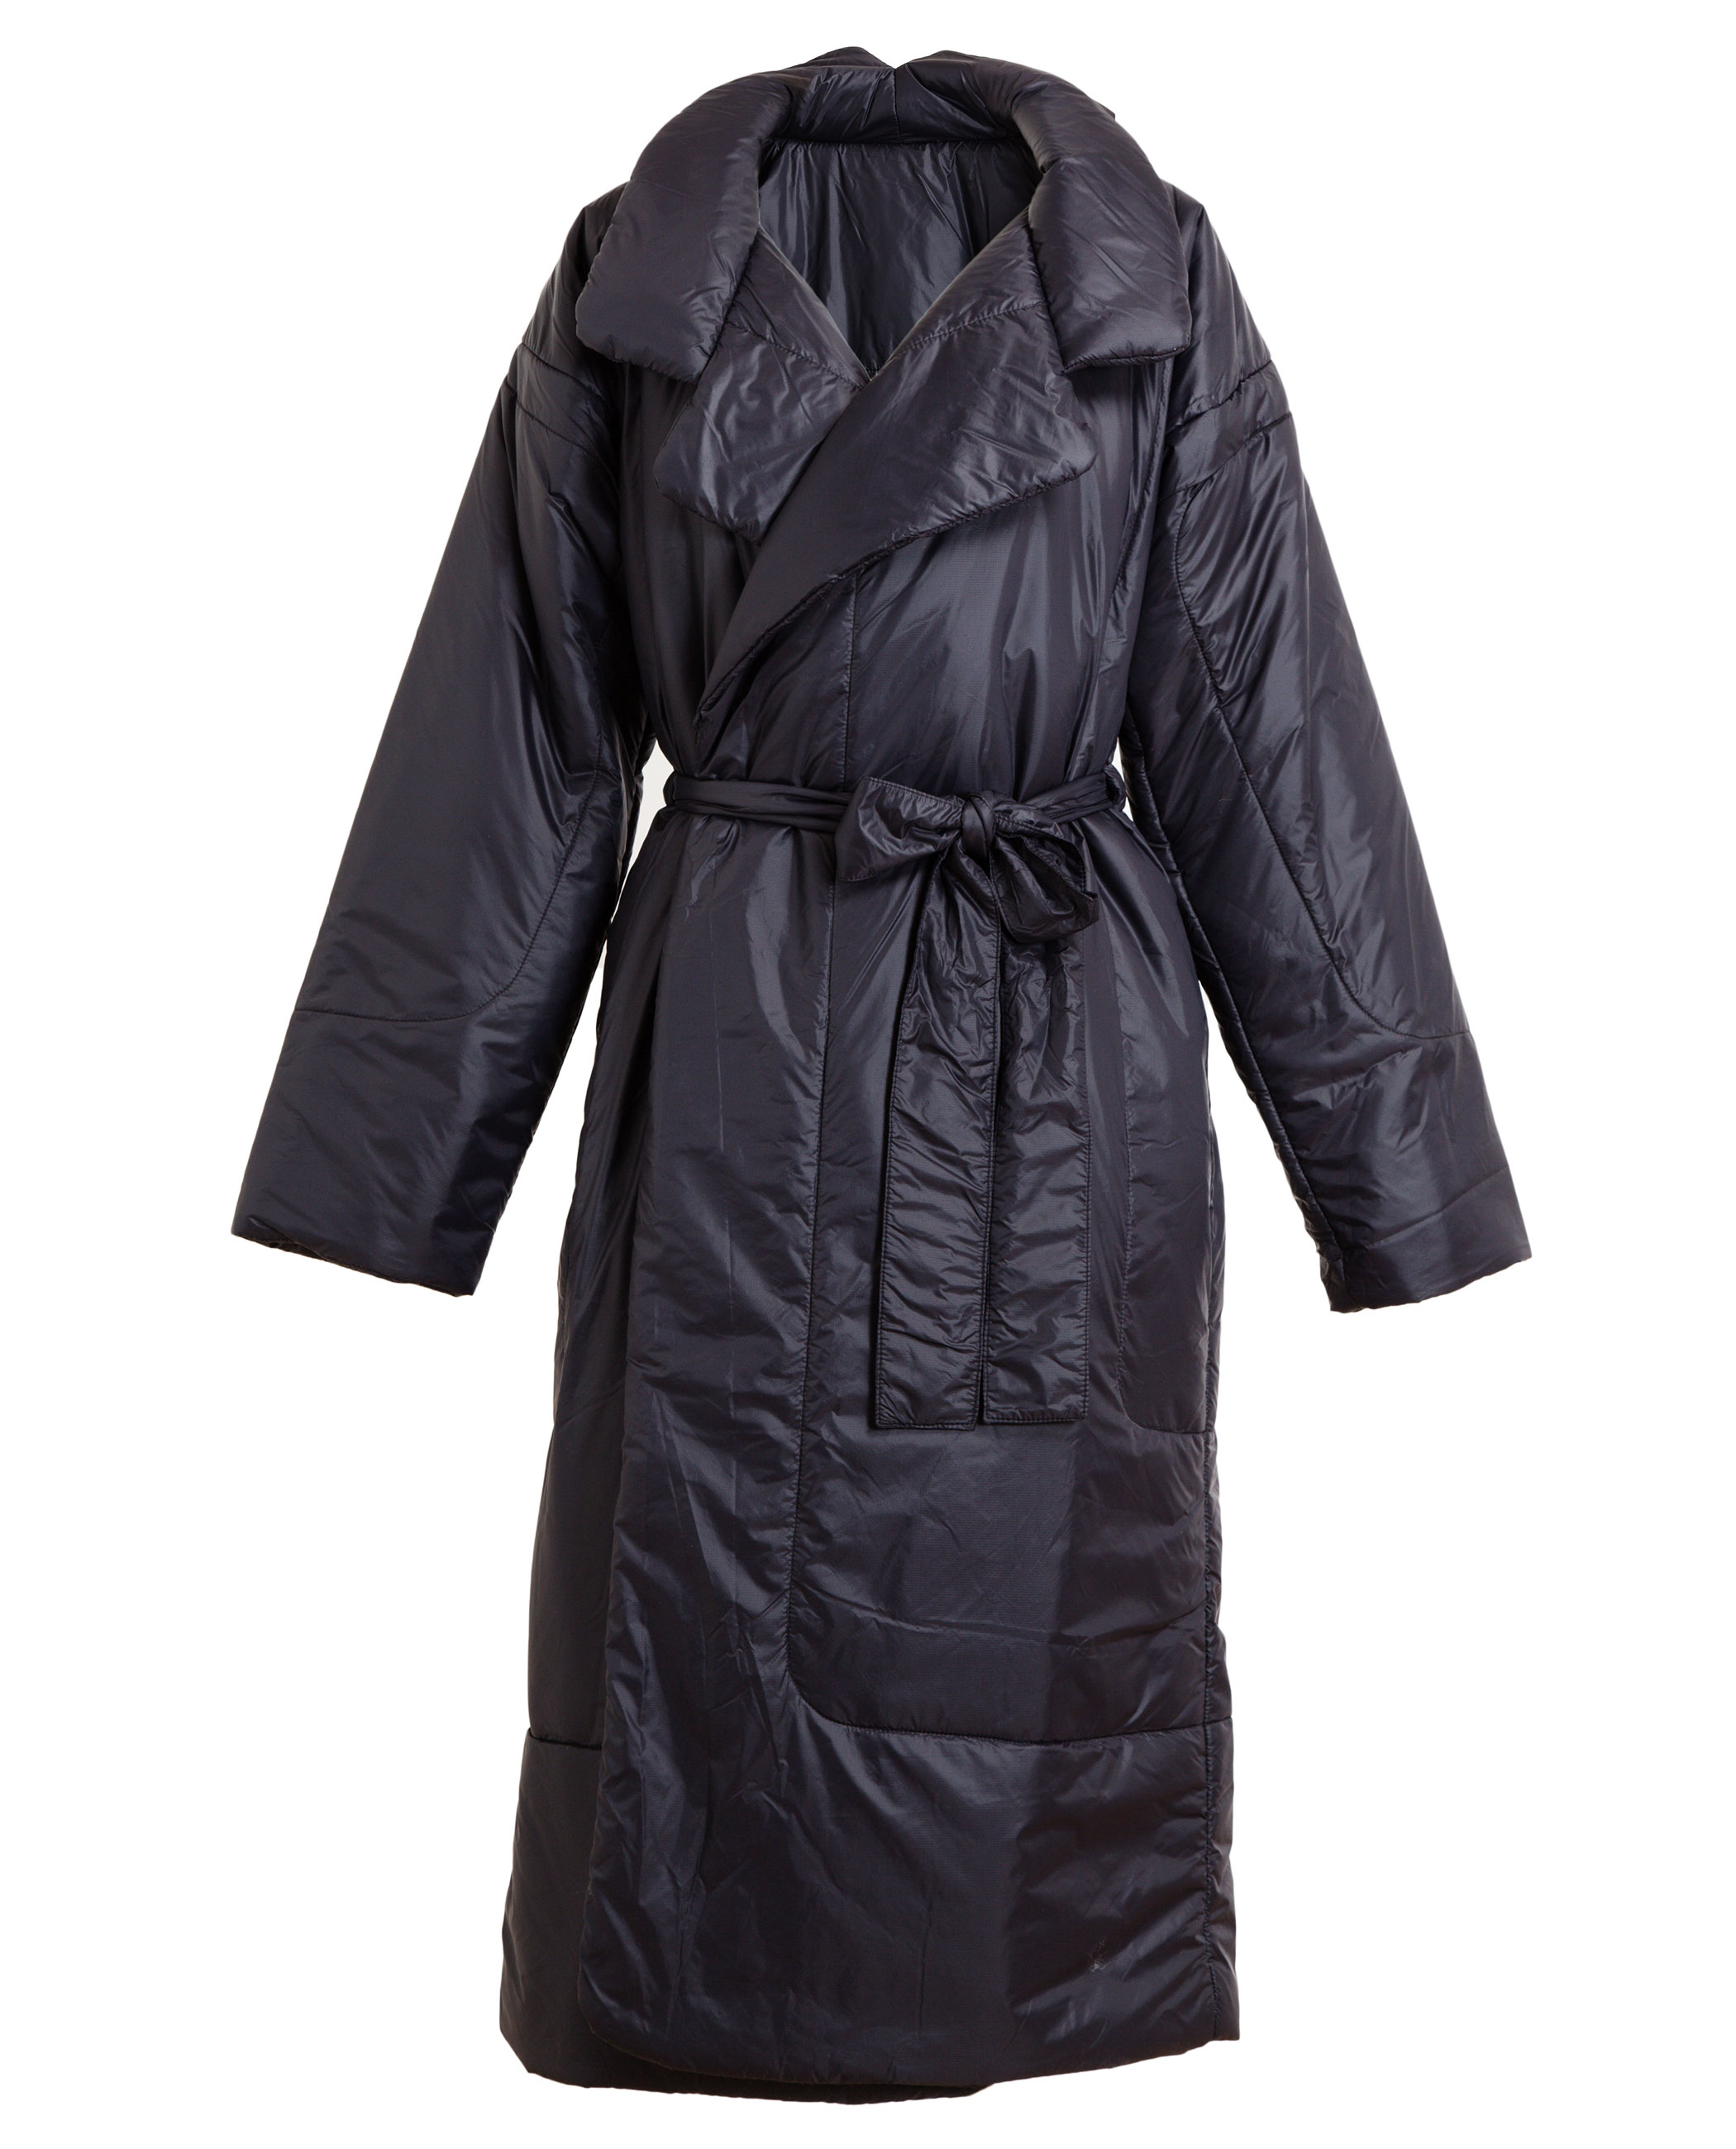 Norma kamali Reversible Sleeping Bag Long Coat in Black | Lyst